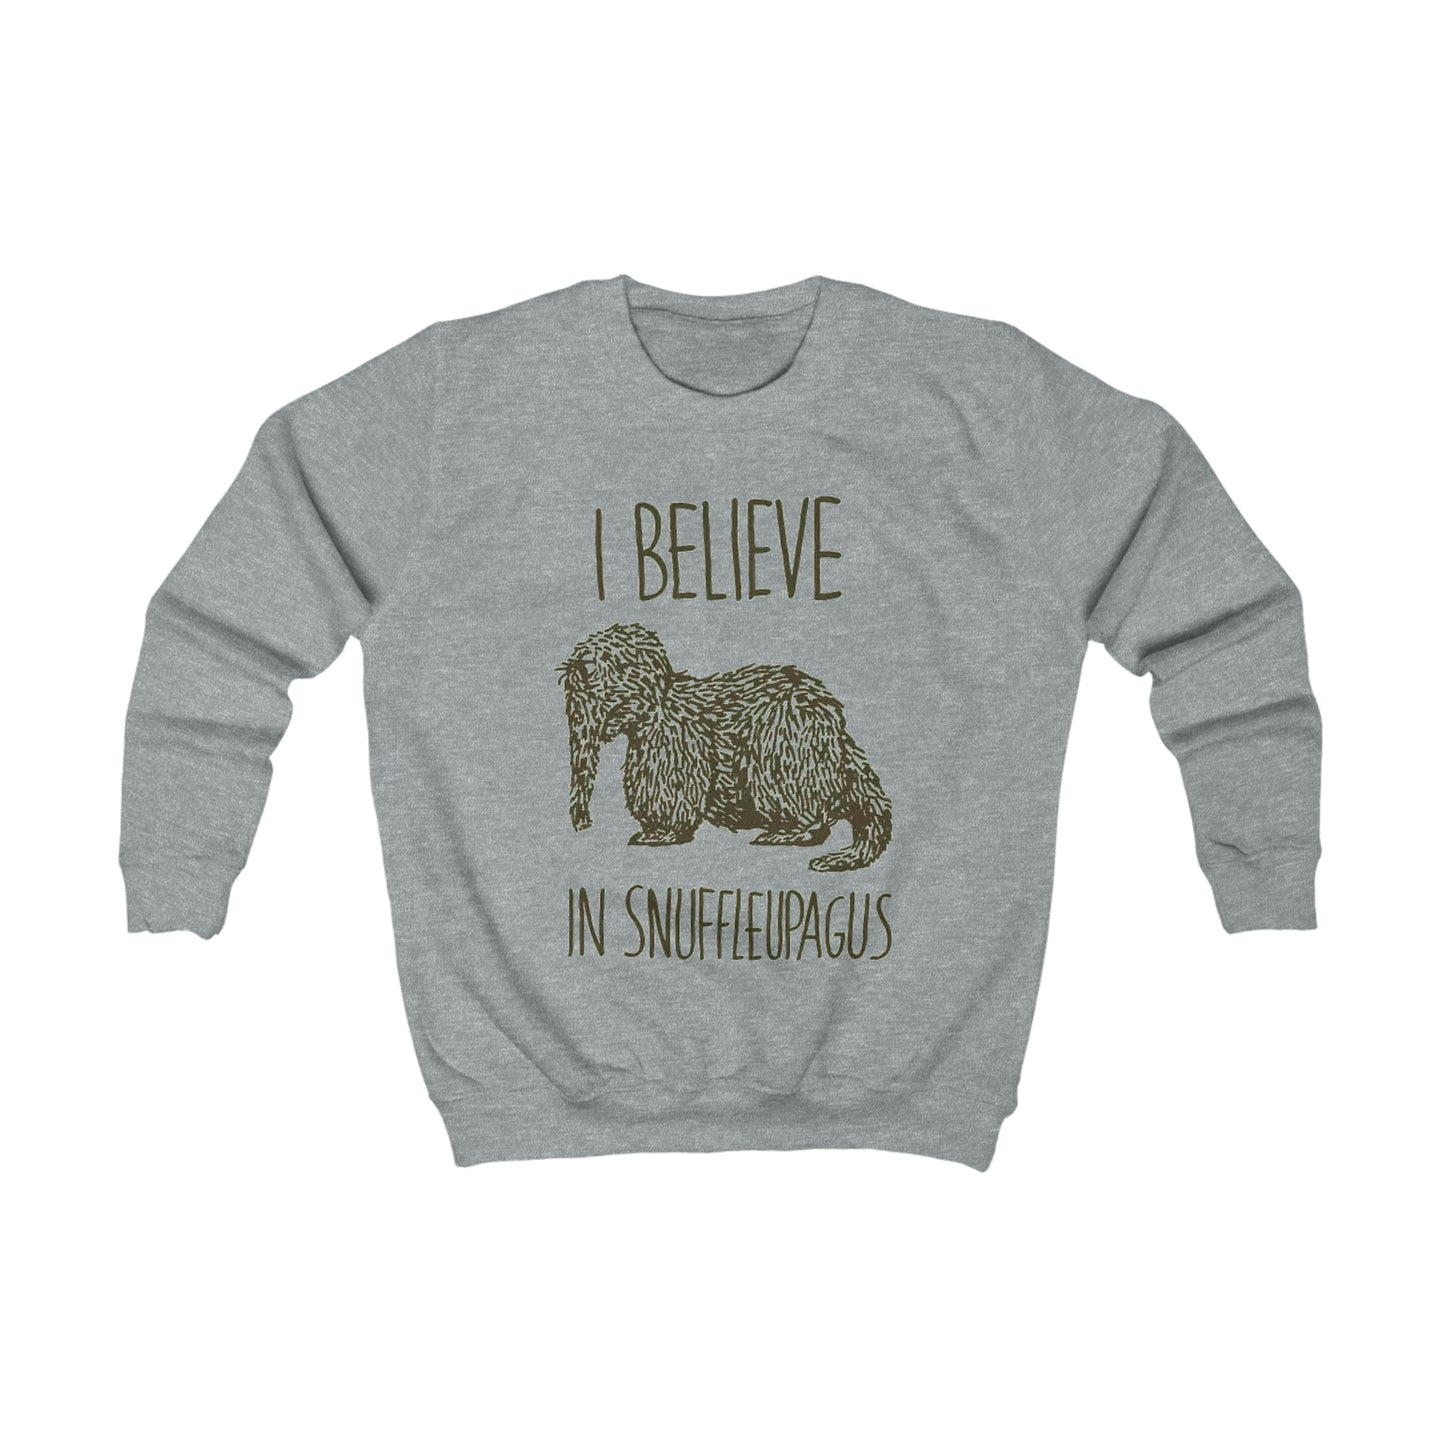 I believe in Snuffleupagus - Kids Sweatshirt